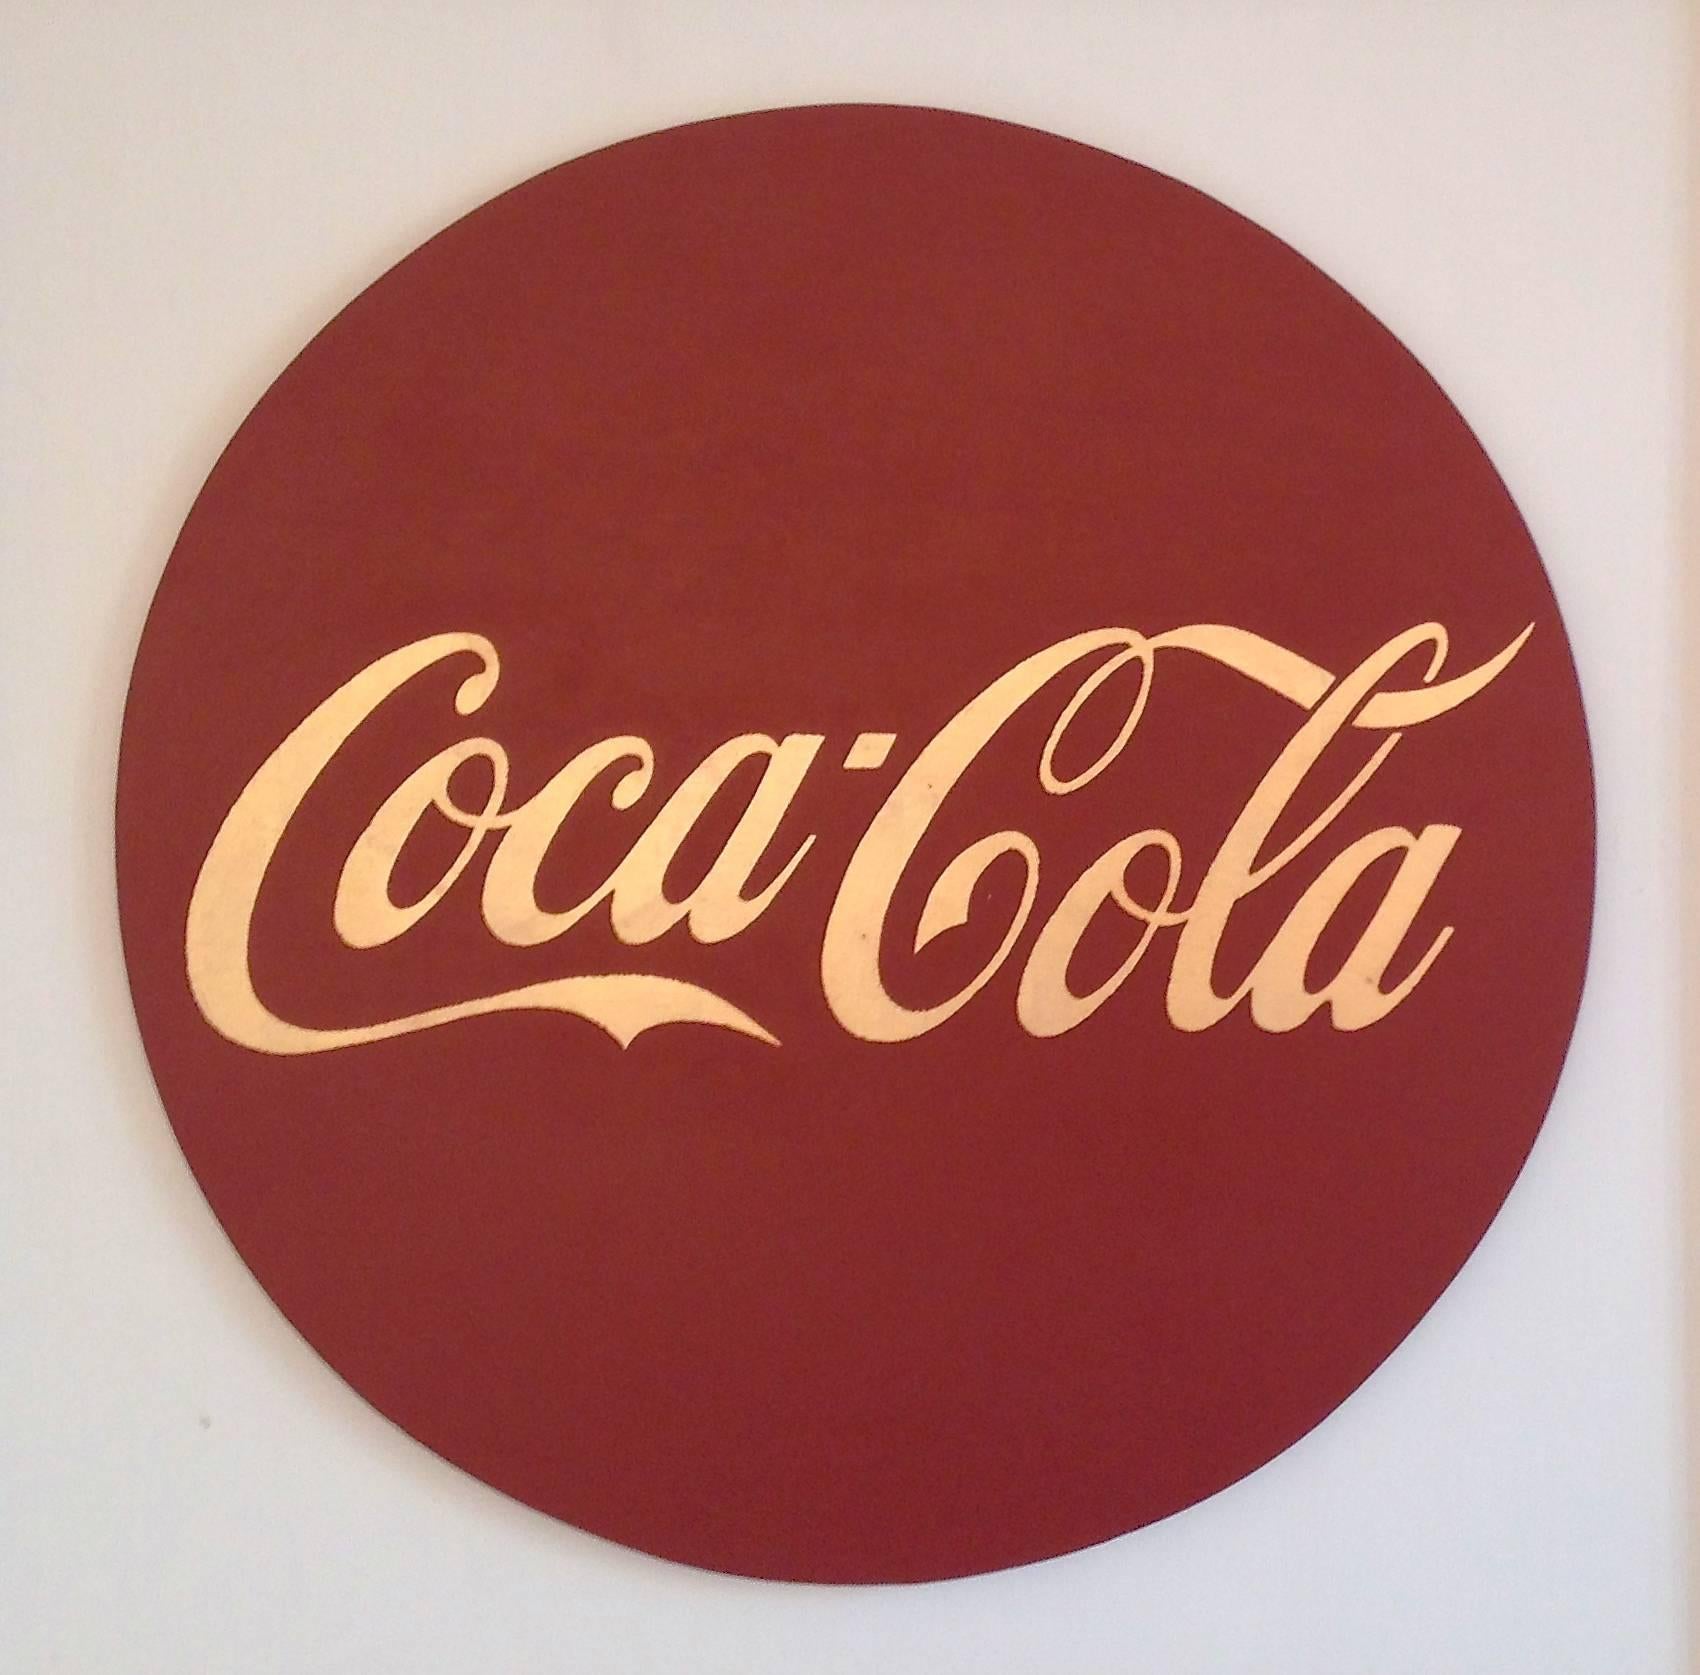 "ICONA"  Pop, Coca-Cola Symbol,  23 Kt. Gold Leaf/Oil, Round,  Red/Rust on White